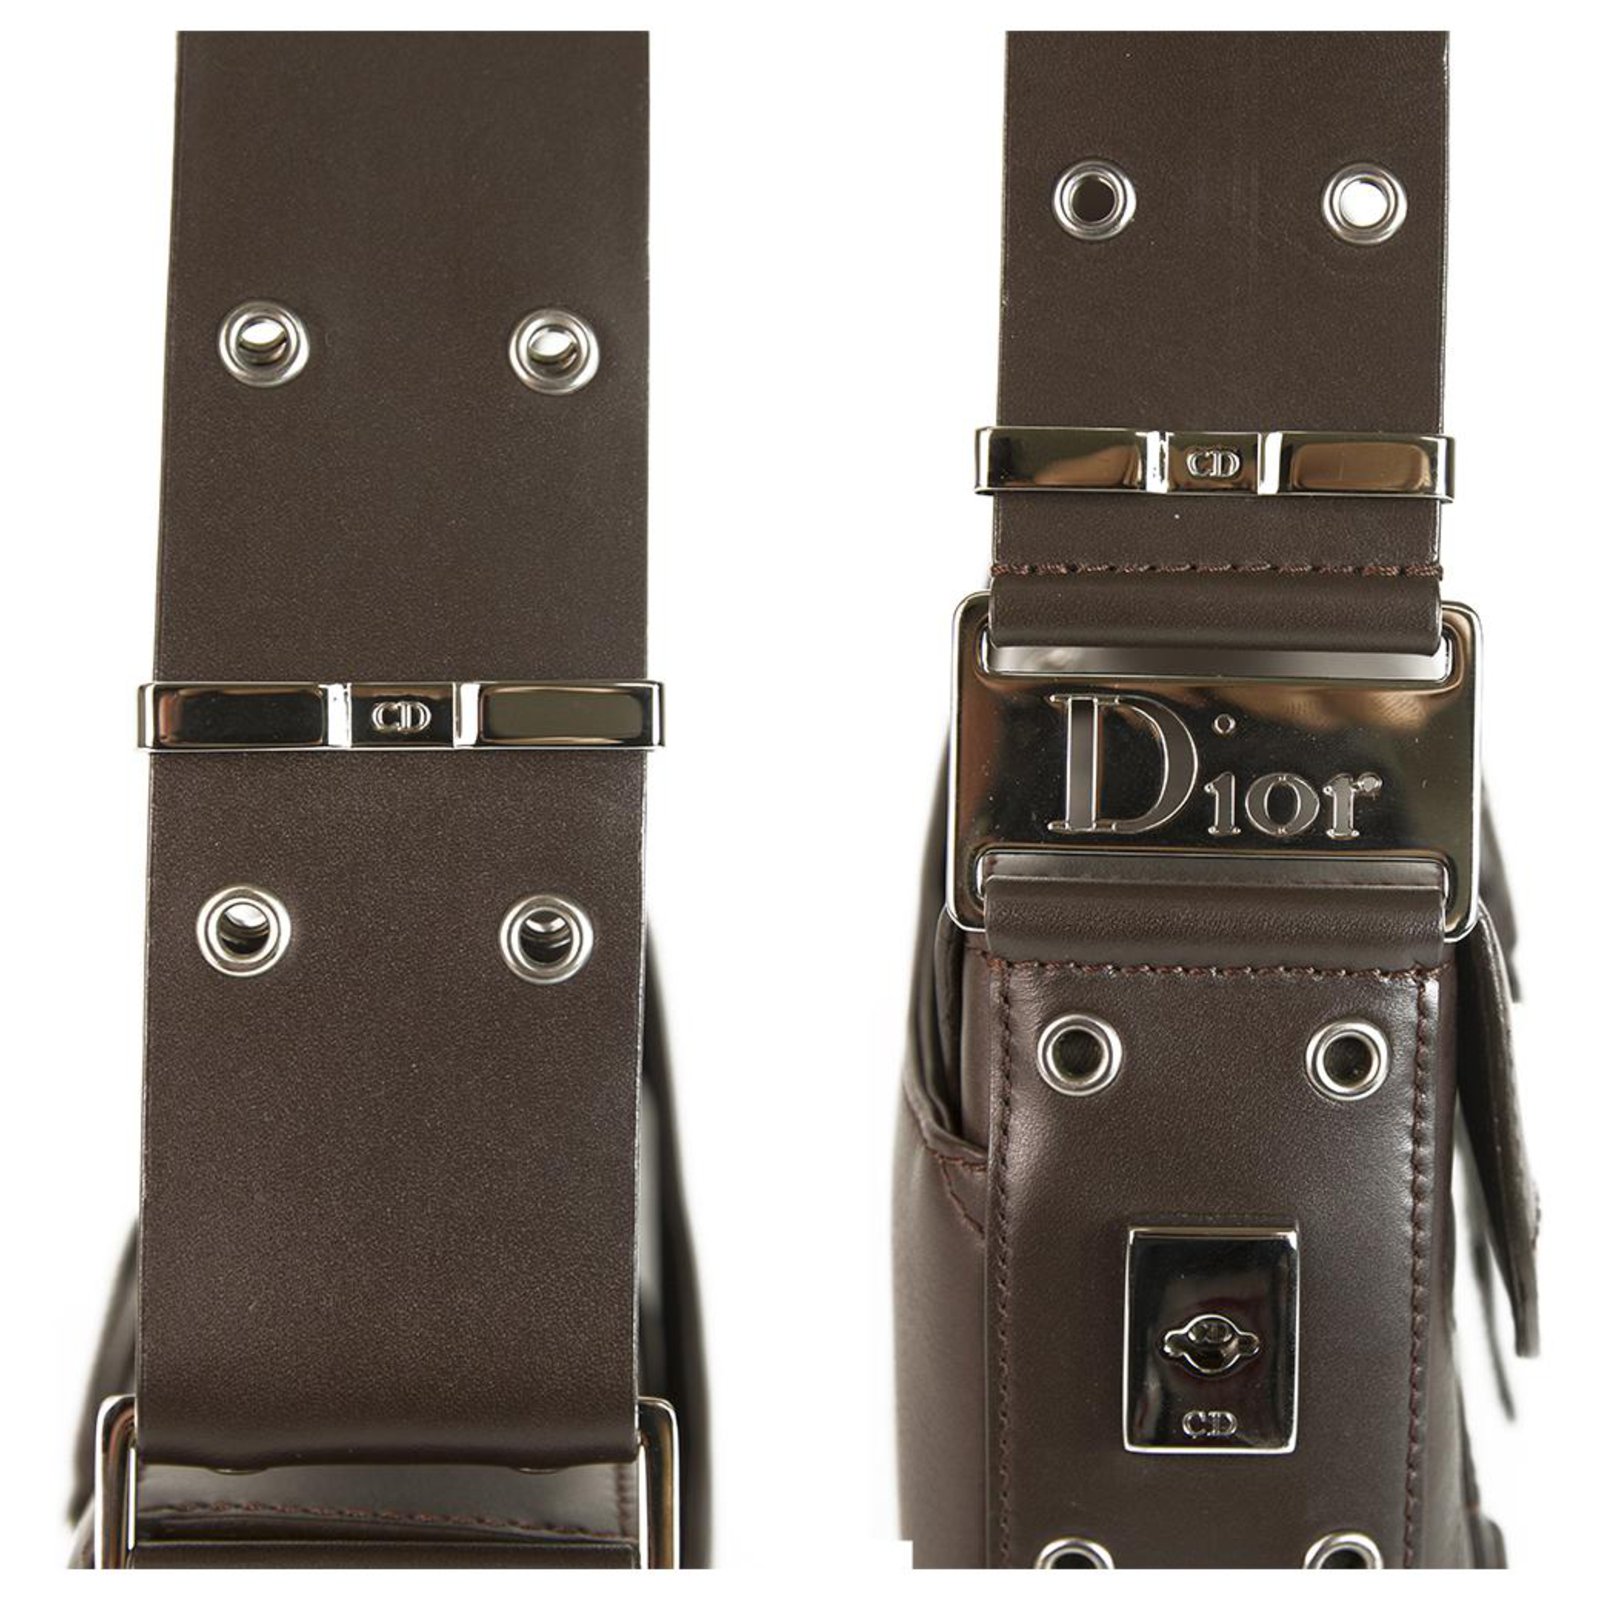 Christian Dior Columbus Y2K Leather Shoulder Bag Black - $1480 - From Raquel